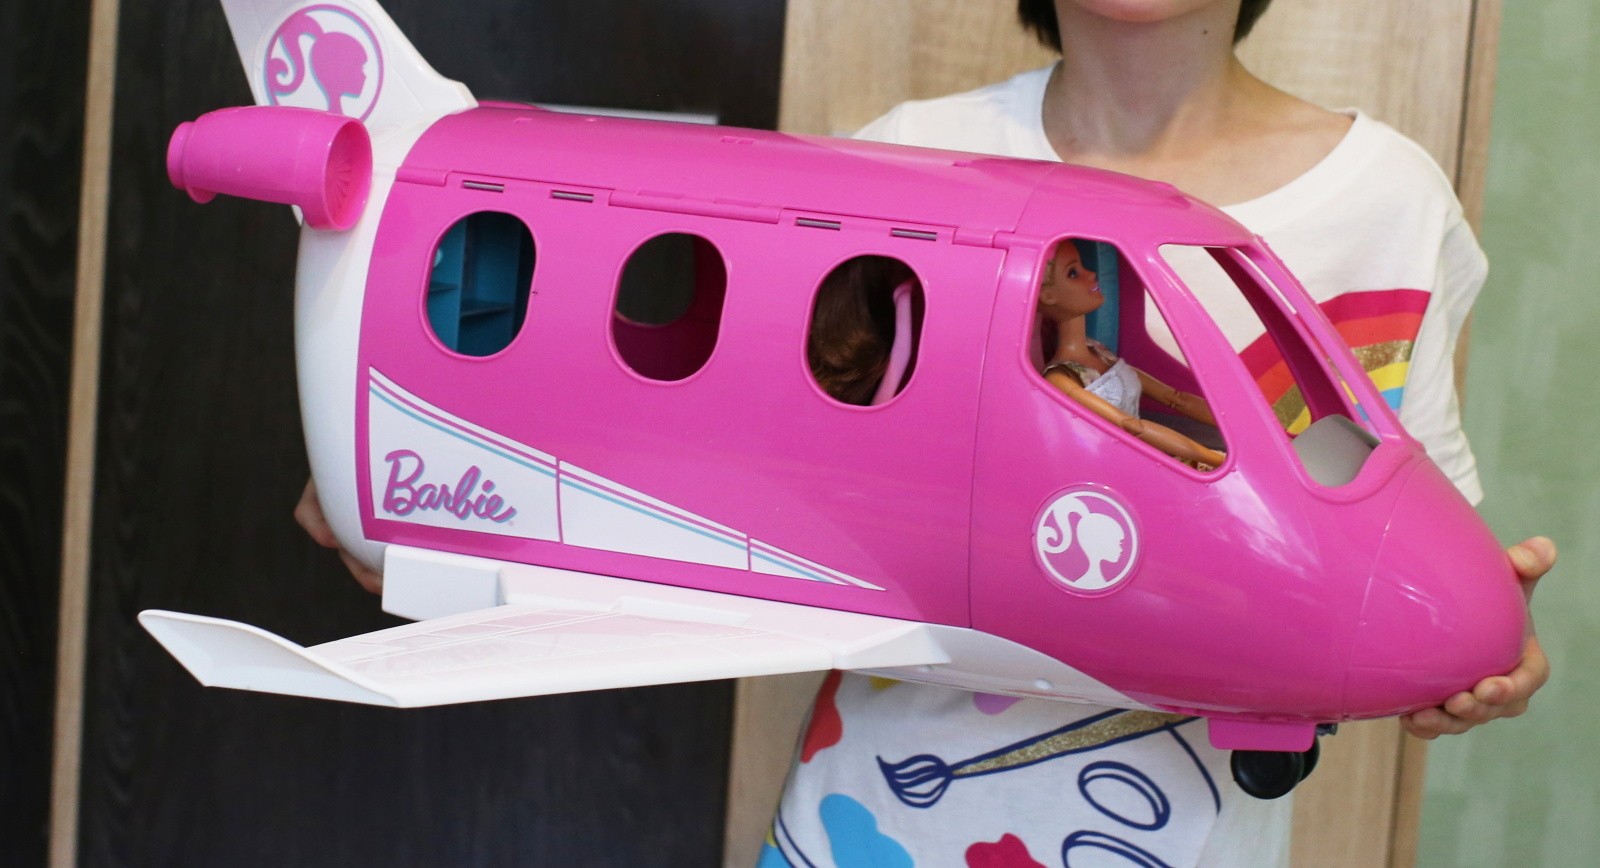 barbie plane target